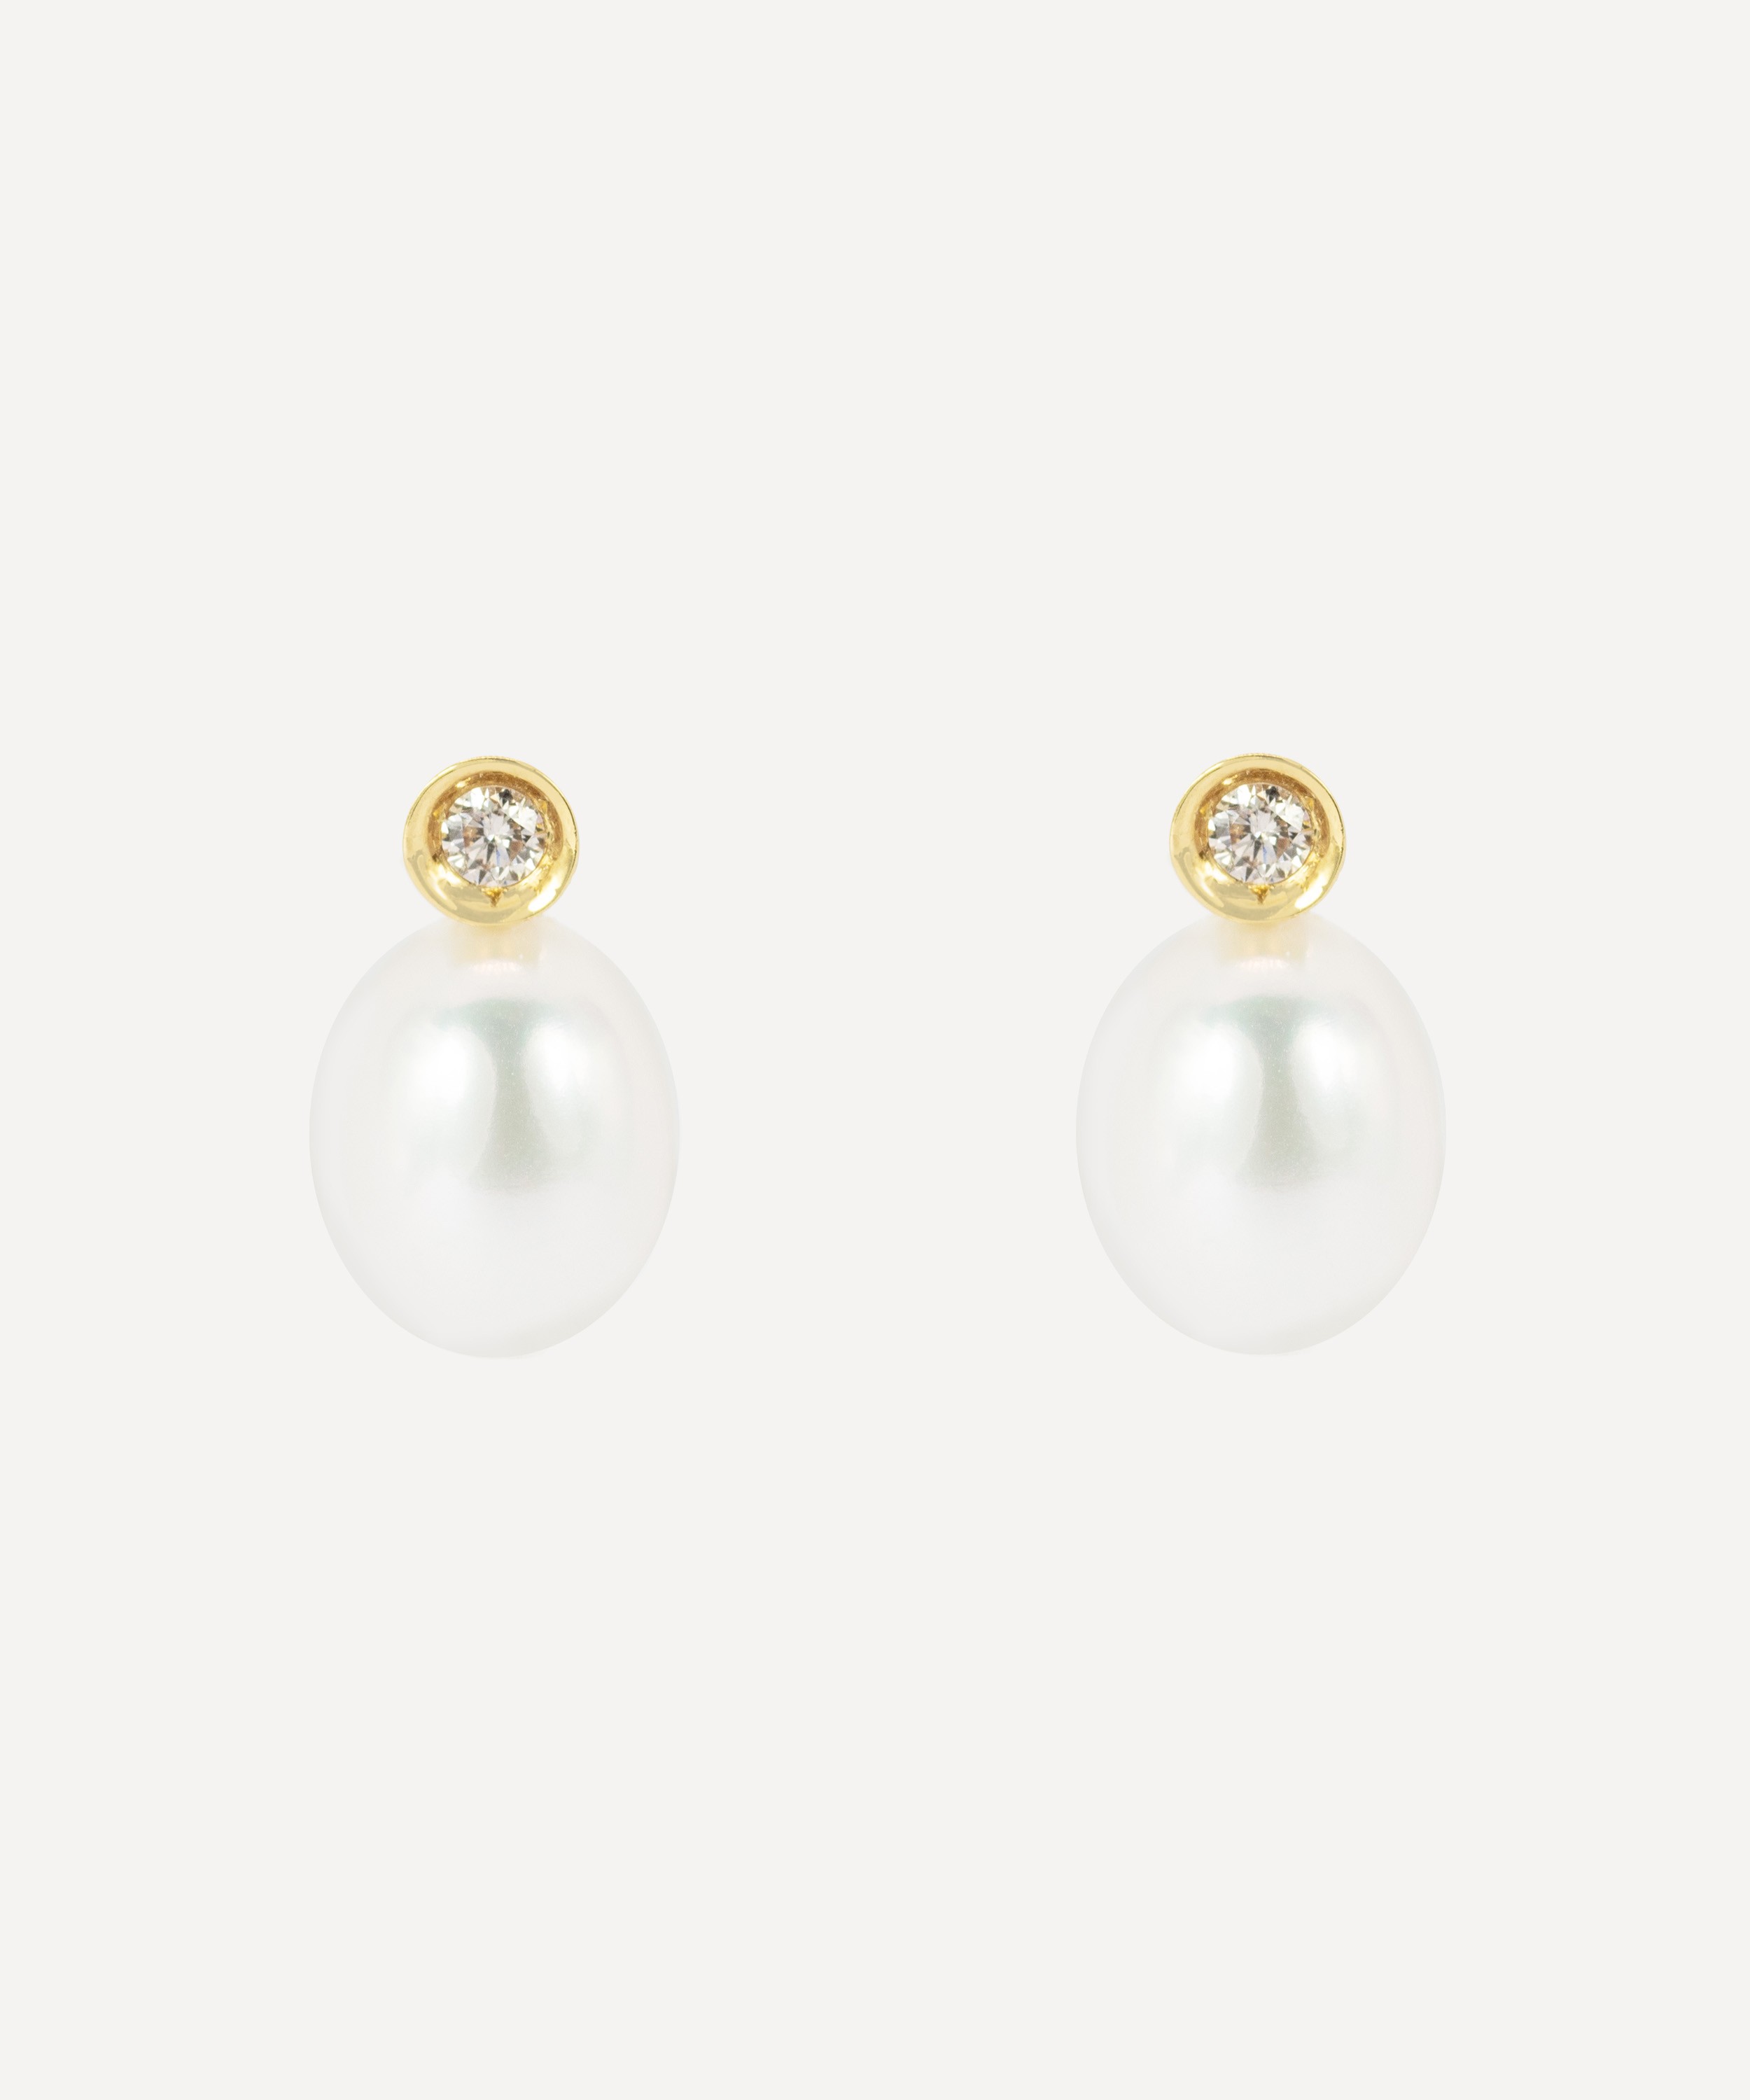 Kojis - 18ct Gold Pearl and Diamond Stud Earrings